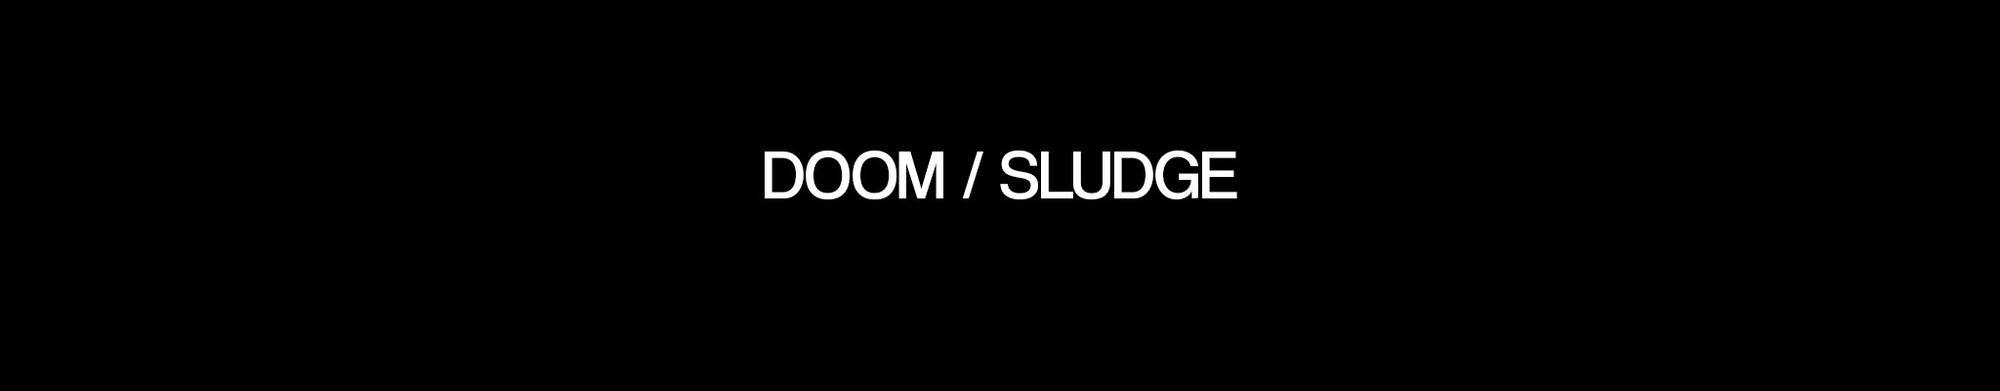 DOOM / SLUDGE